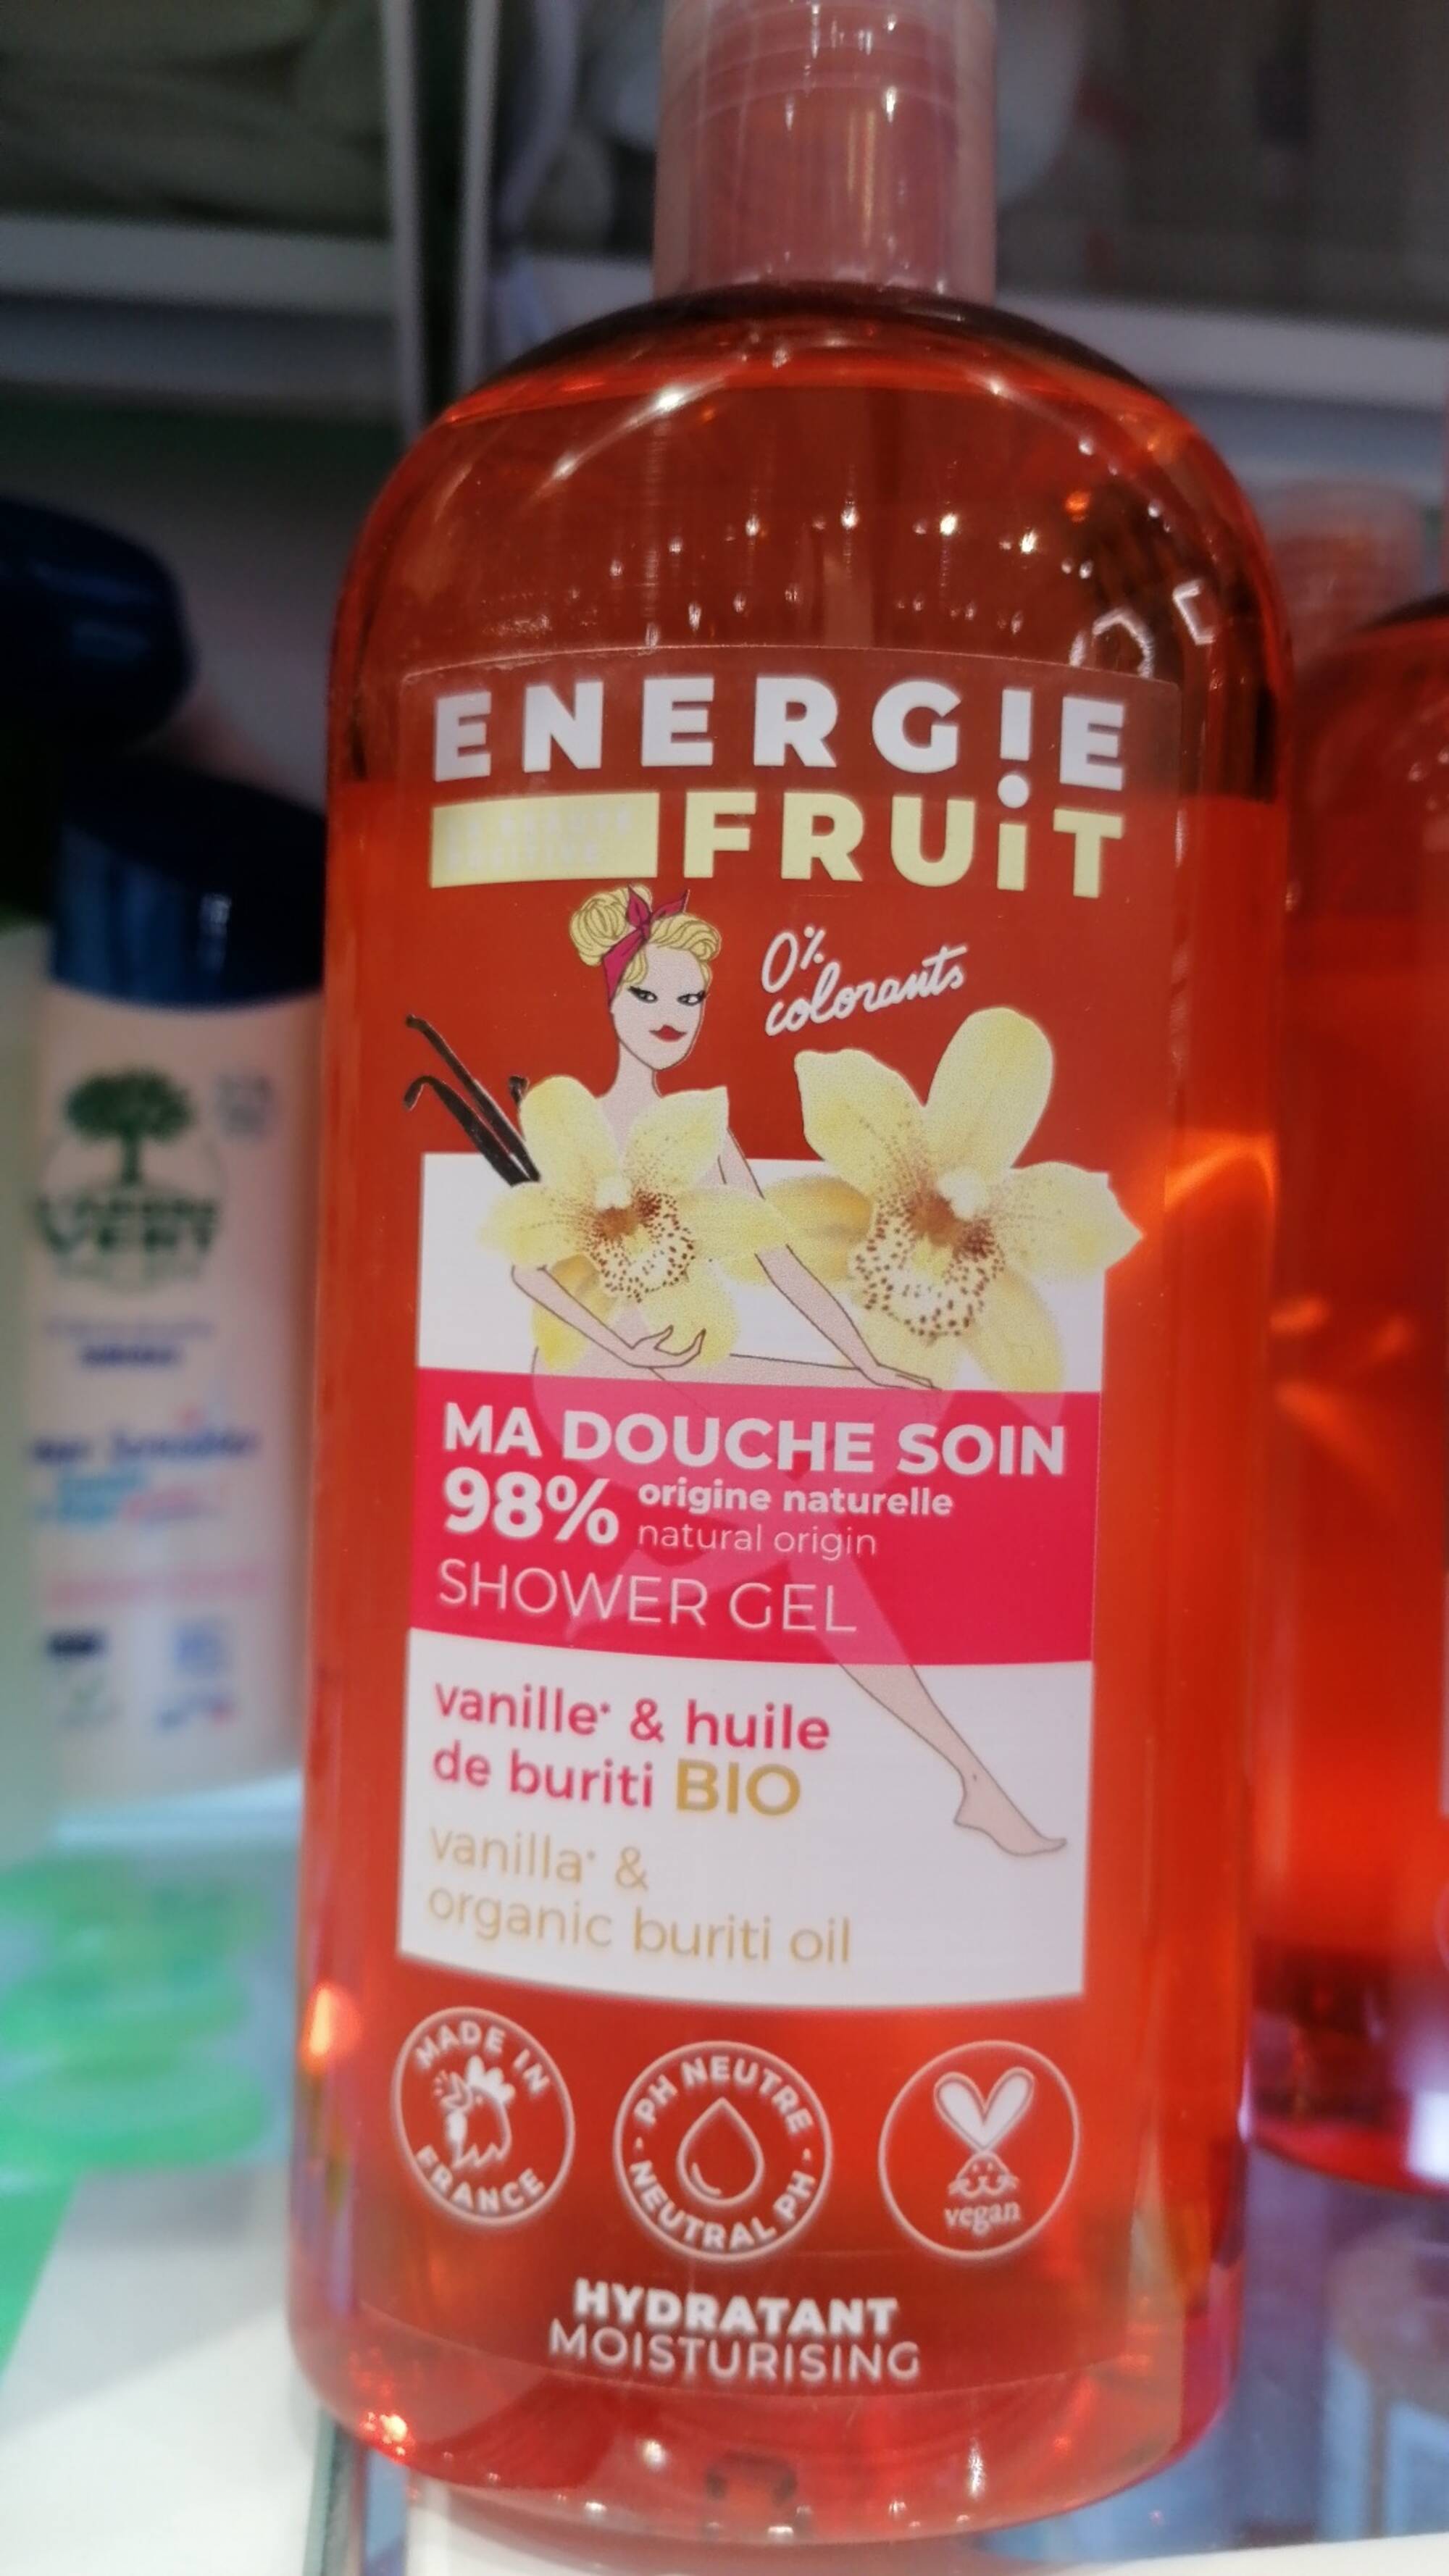 ENERGIE FRUIT - Ma douche soin Vanille & huile de buriti bio